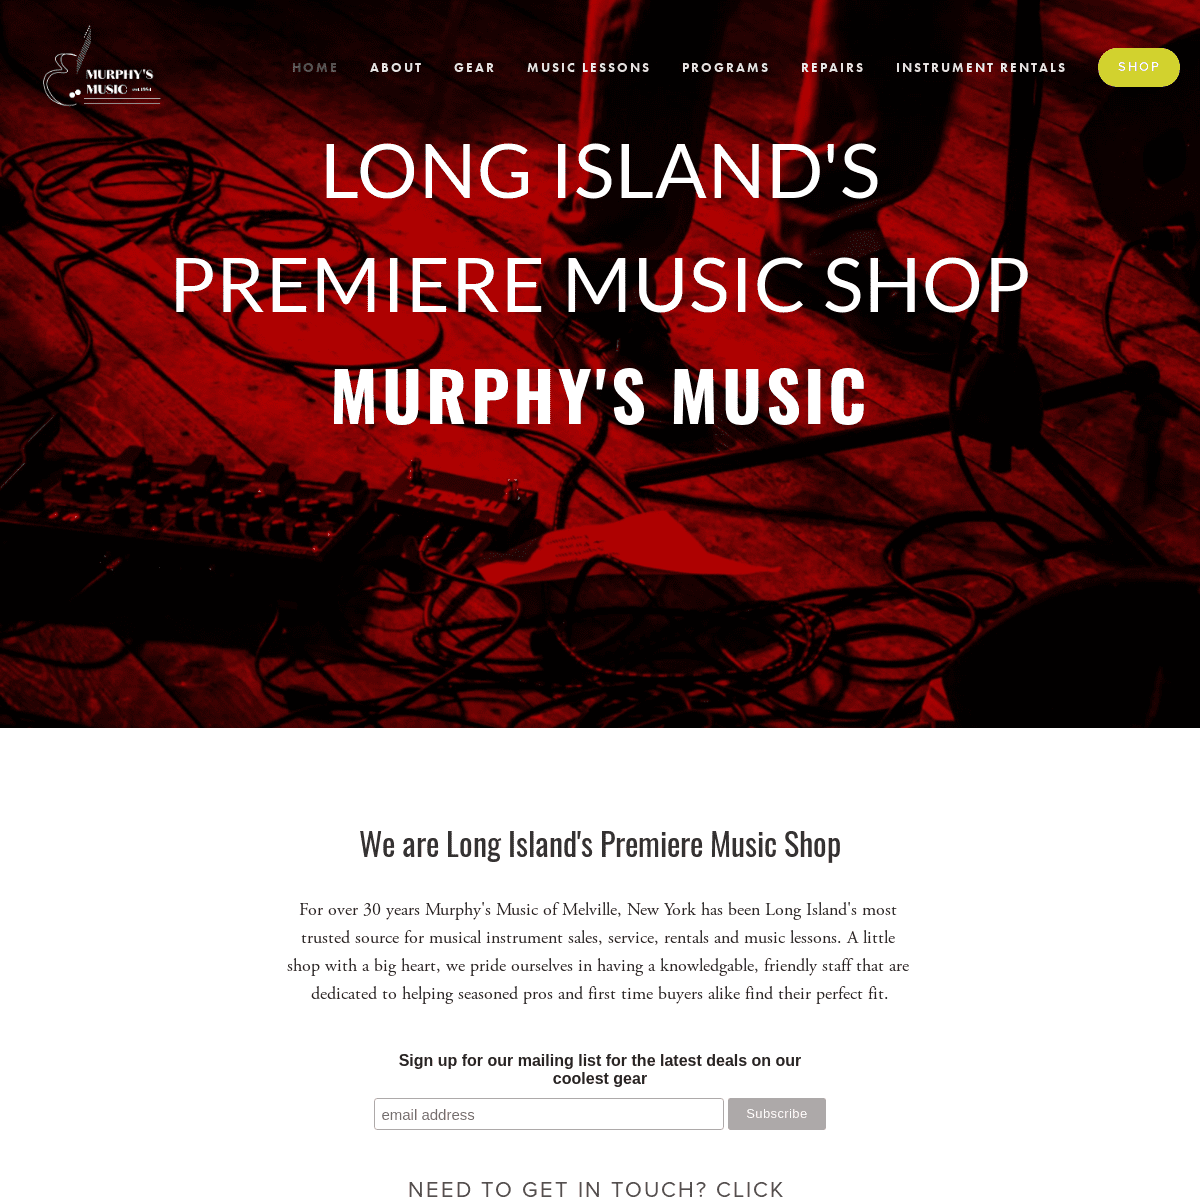 A complete backup of murphysmusicshop.com